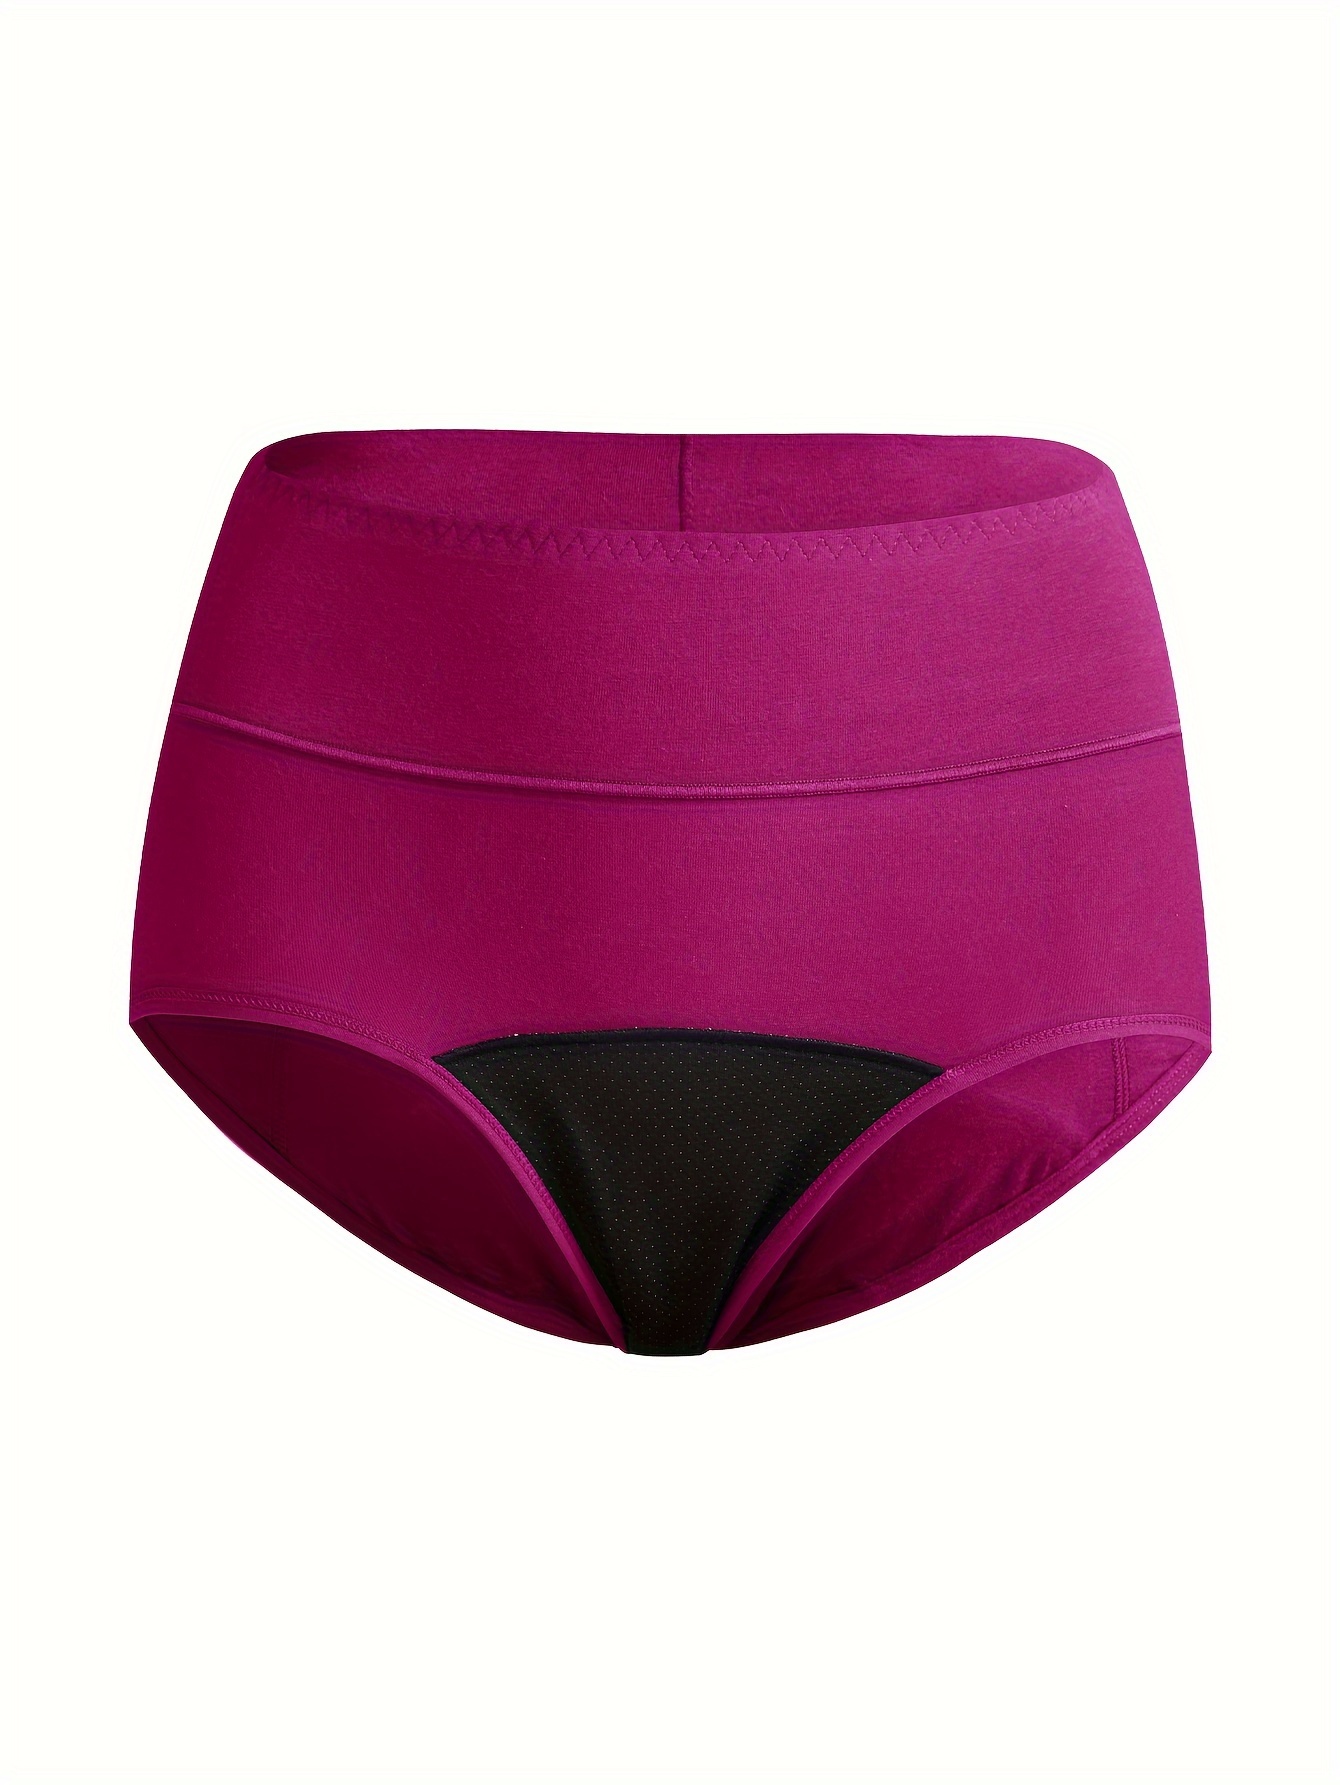  Period Underwear Menstrual Panties Postpartum Underpants  Lace Hipsters Women Briefs 3 Pack Lilac 4XL Plus Size